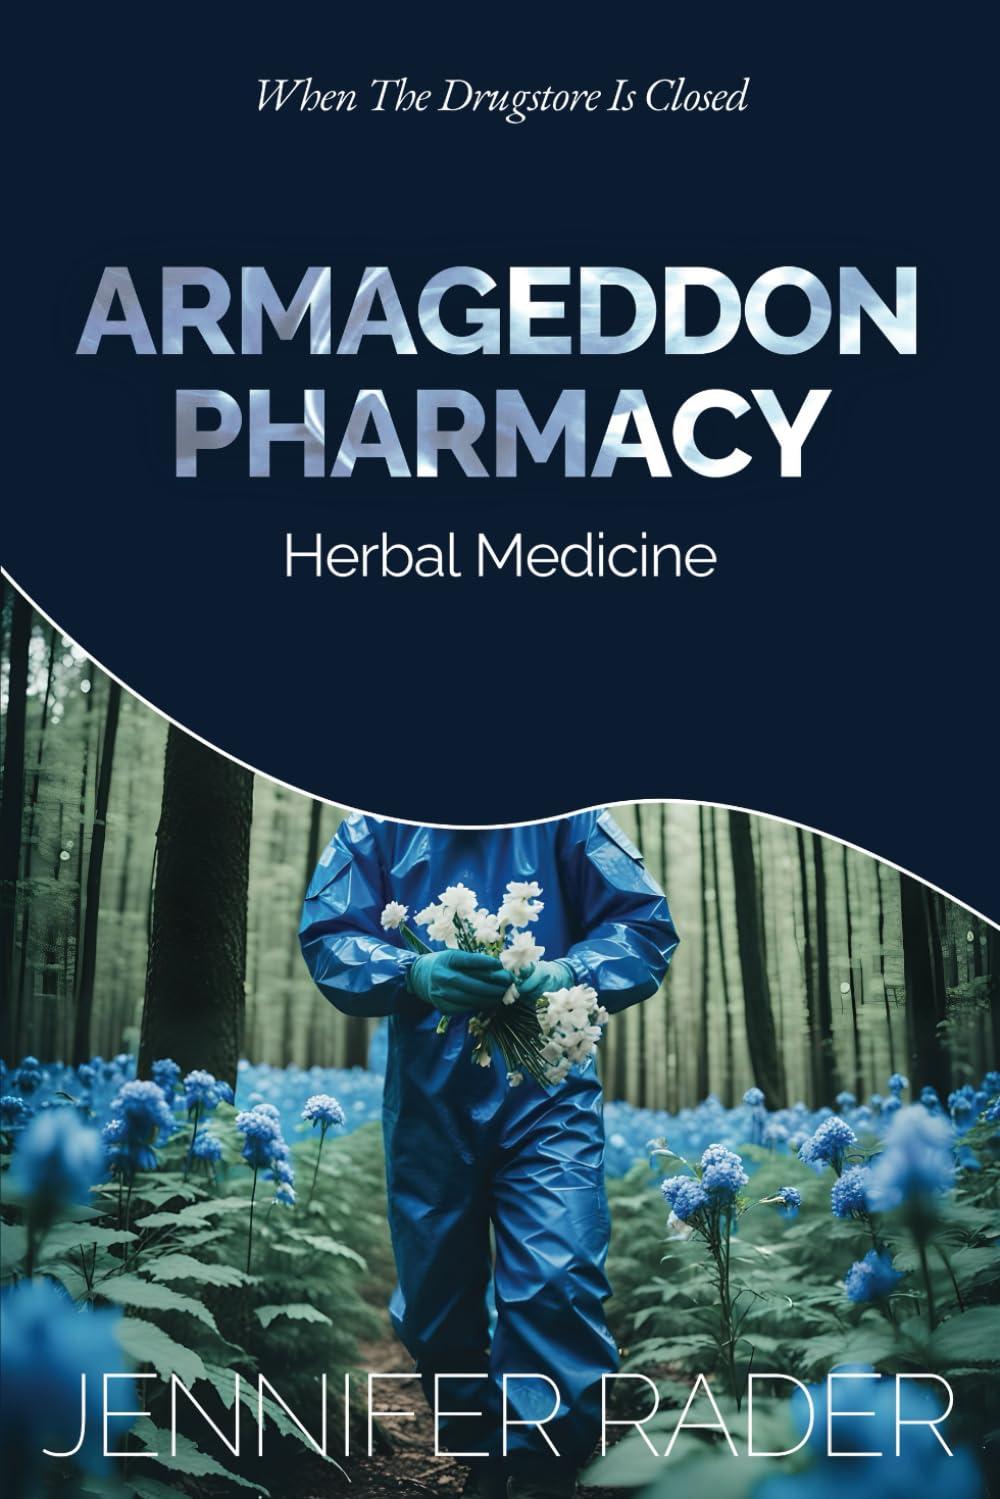 armageddon pharmacy herbal medicine when the drugstore is closed 1st edition jennifer rader b0d1mg35j3,